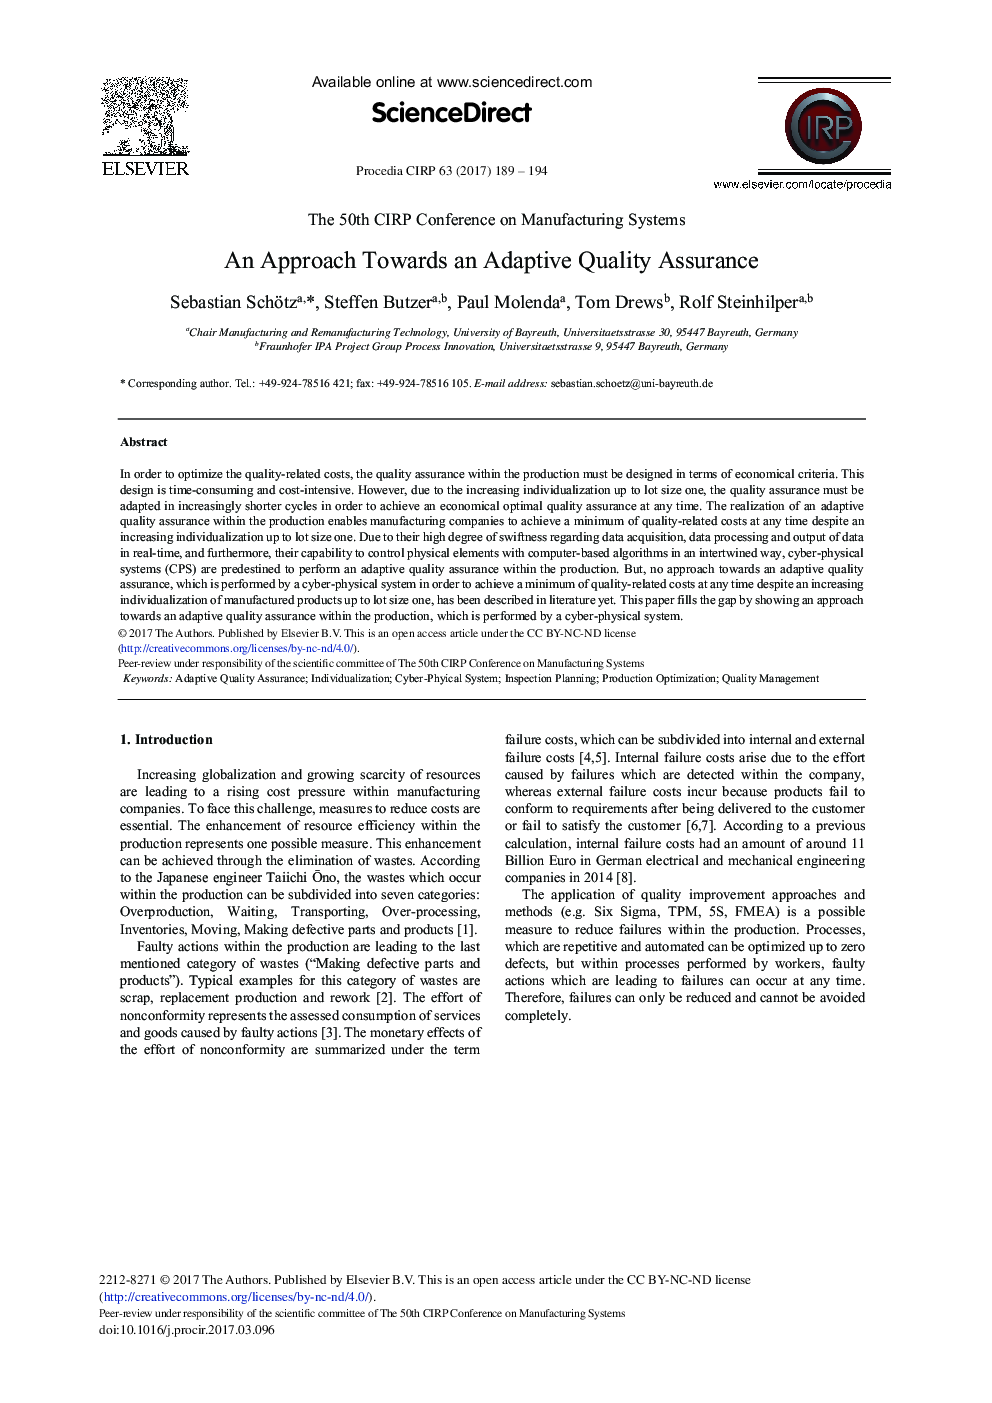 An Approach Towards an Adaptive Quality Assurance